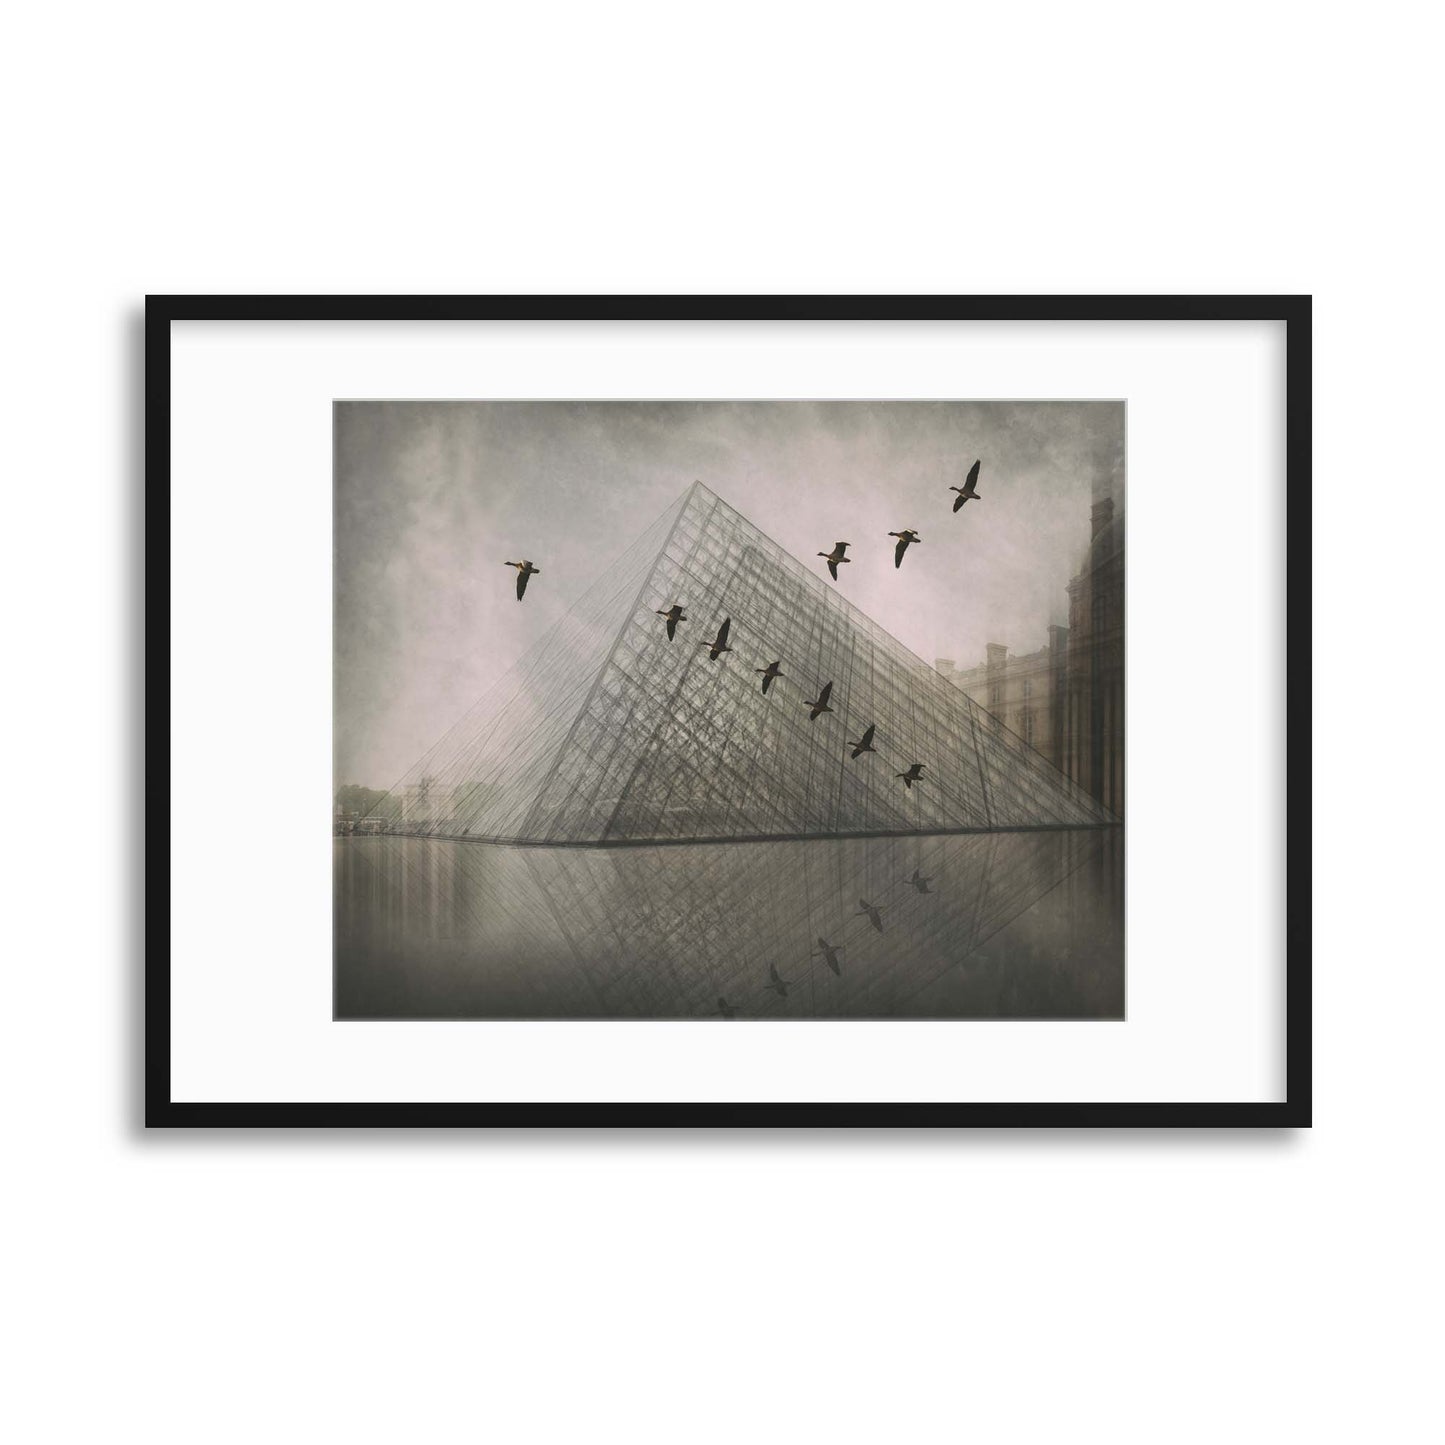 Pyramid-Shaped by Roswitha Schleicher-Schwarz Framed Print - USTAD HOME